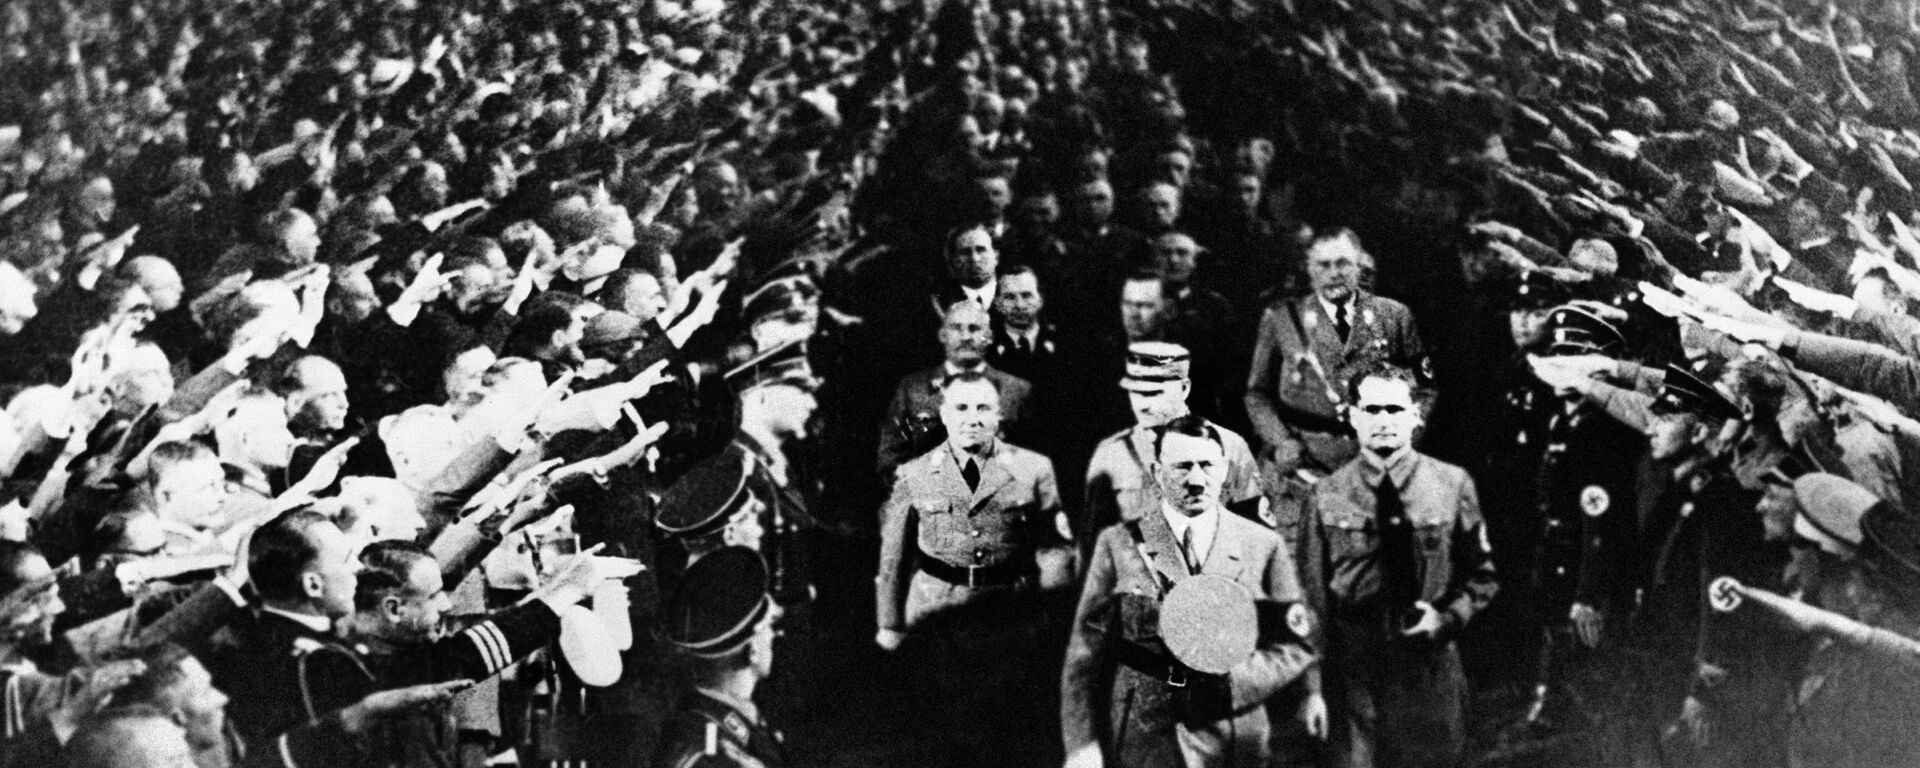 Адолф Хитлер - Sputnik Србија, 1920, 19.04.2020